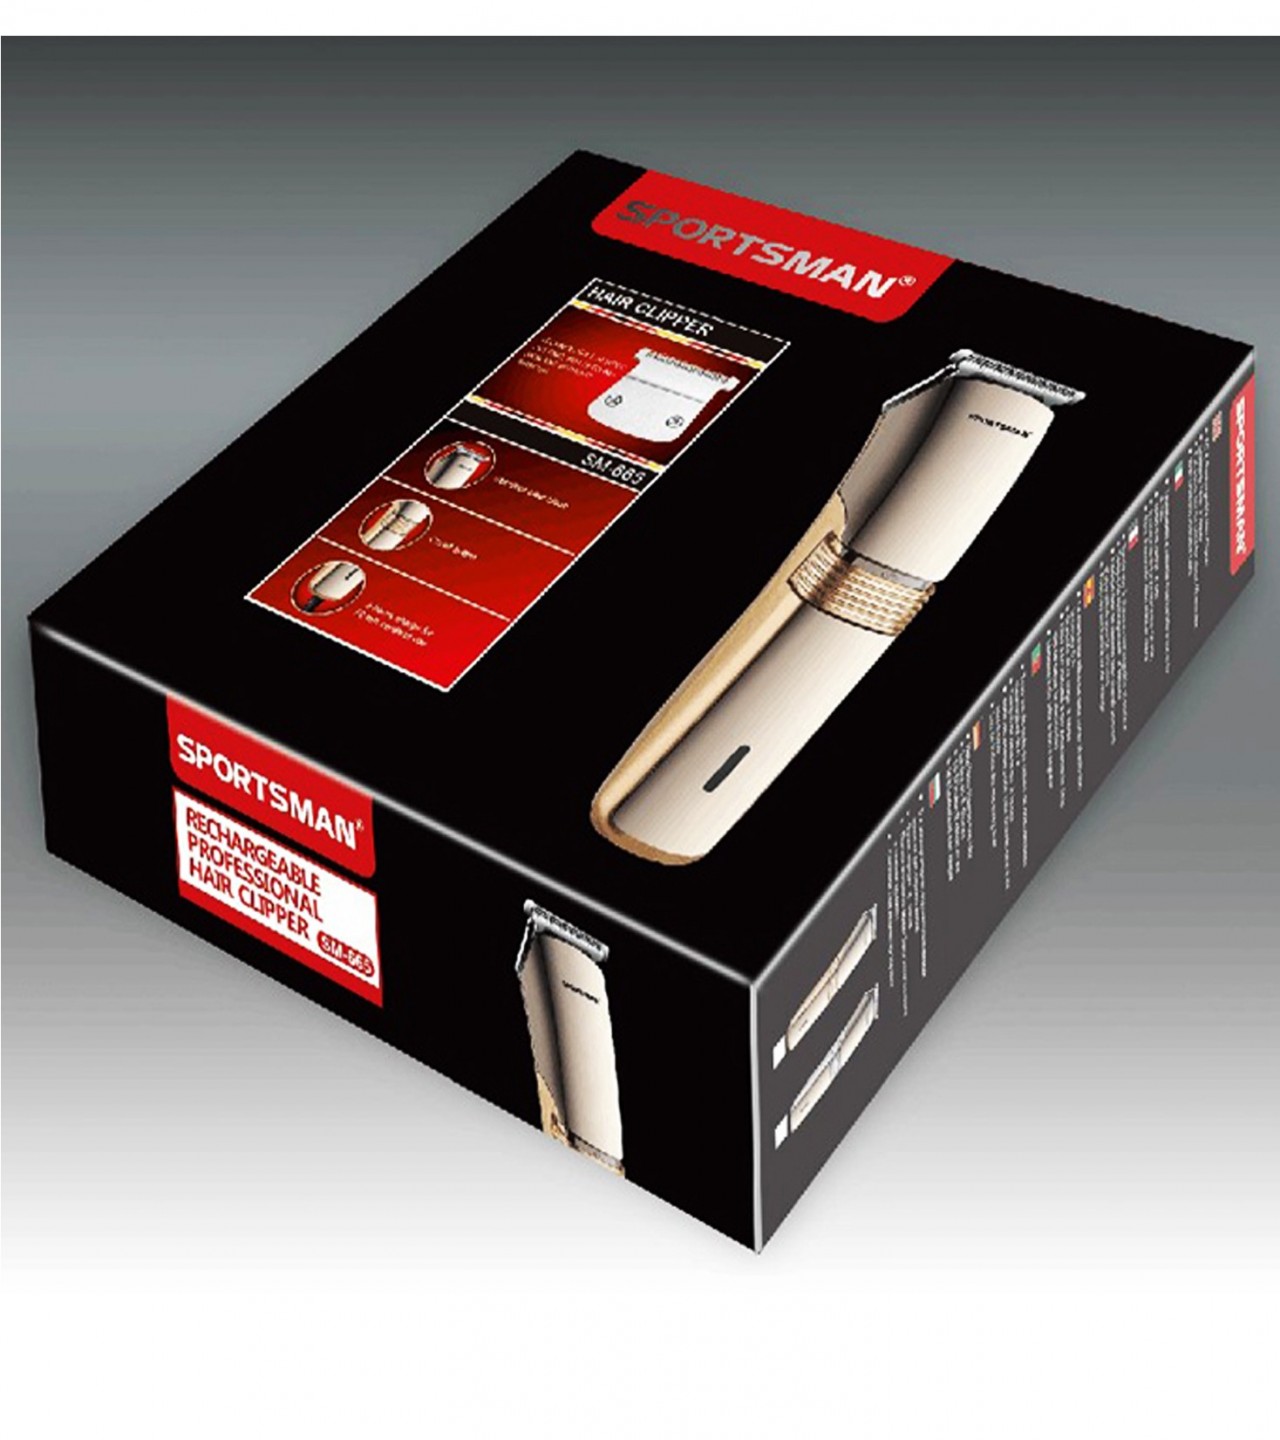 SPORTSMAN High Quality Manual Cordless Hair Trimmer - SM-665